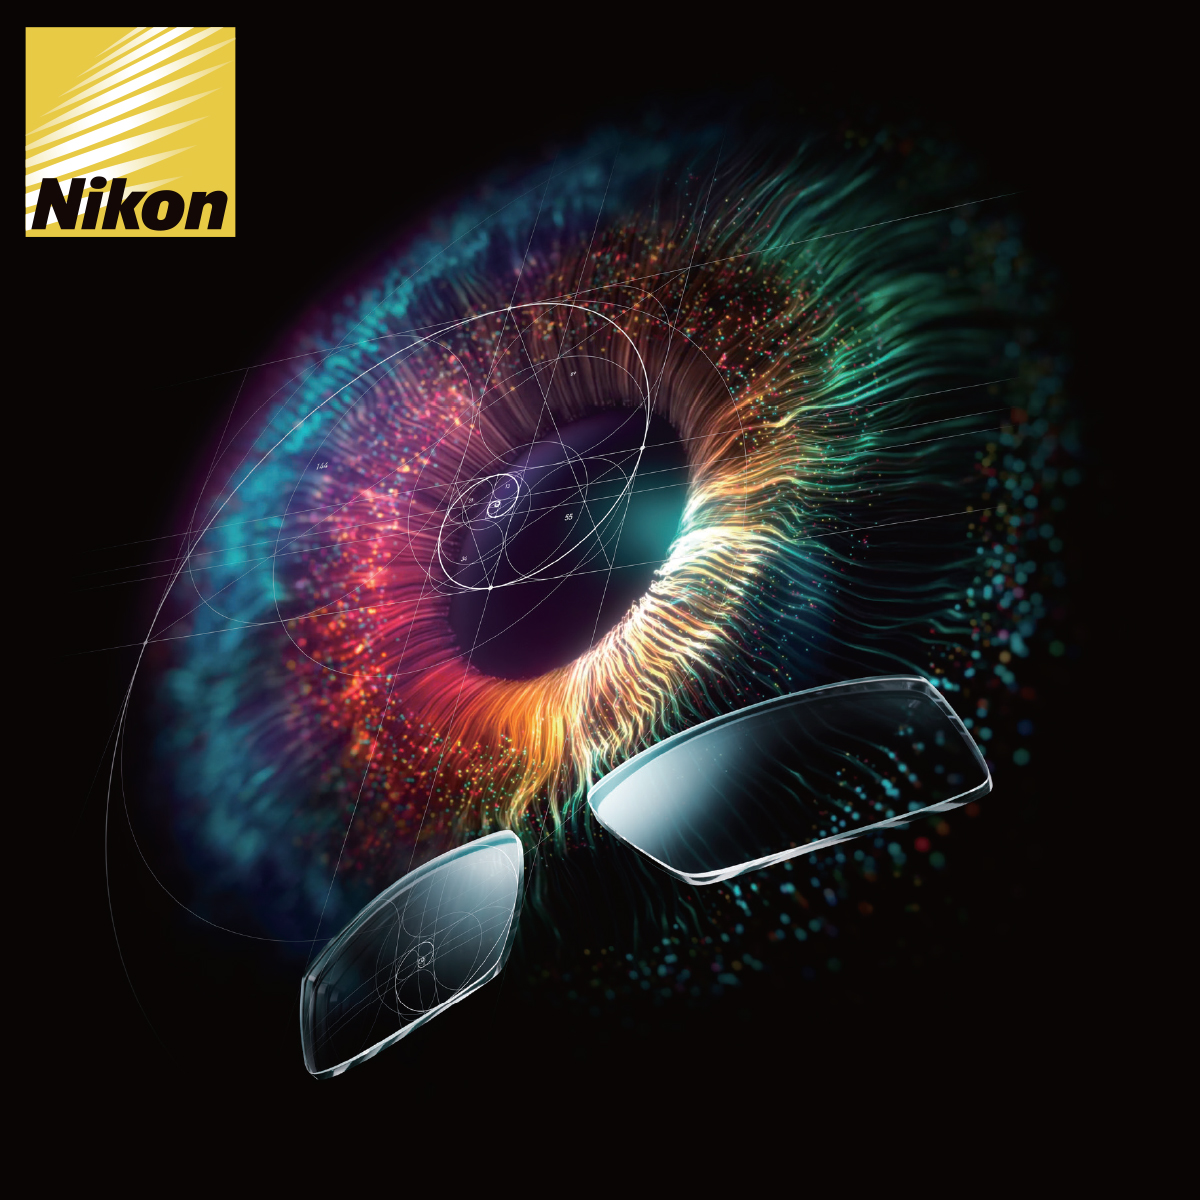 Nikon 全新AI系列渐进镜片